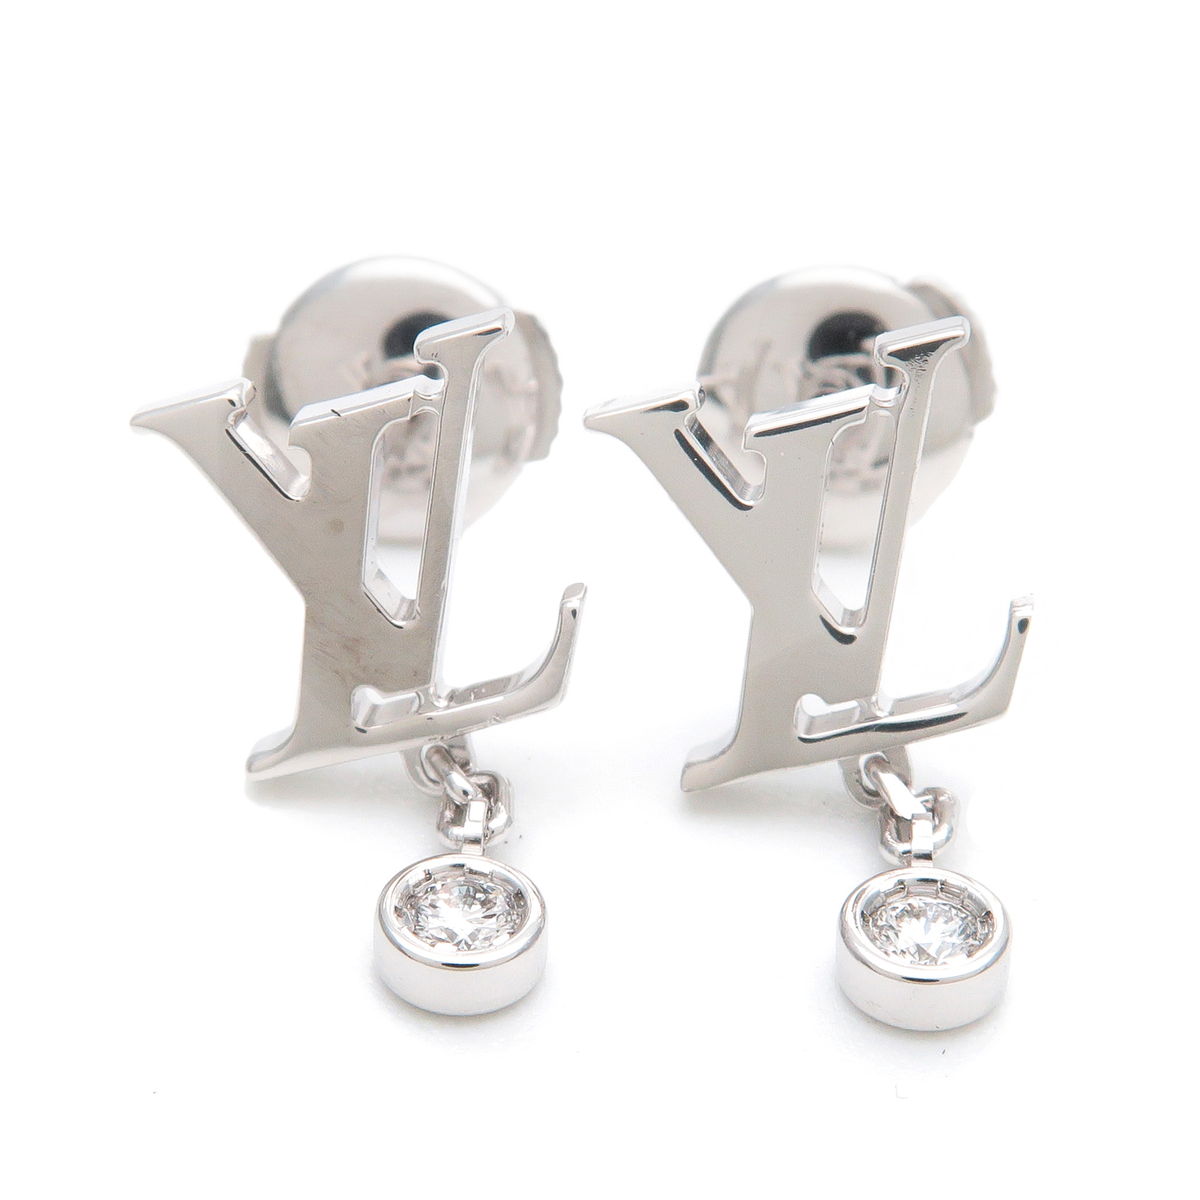 luxury earrings for women lv logo